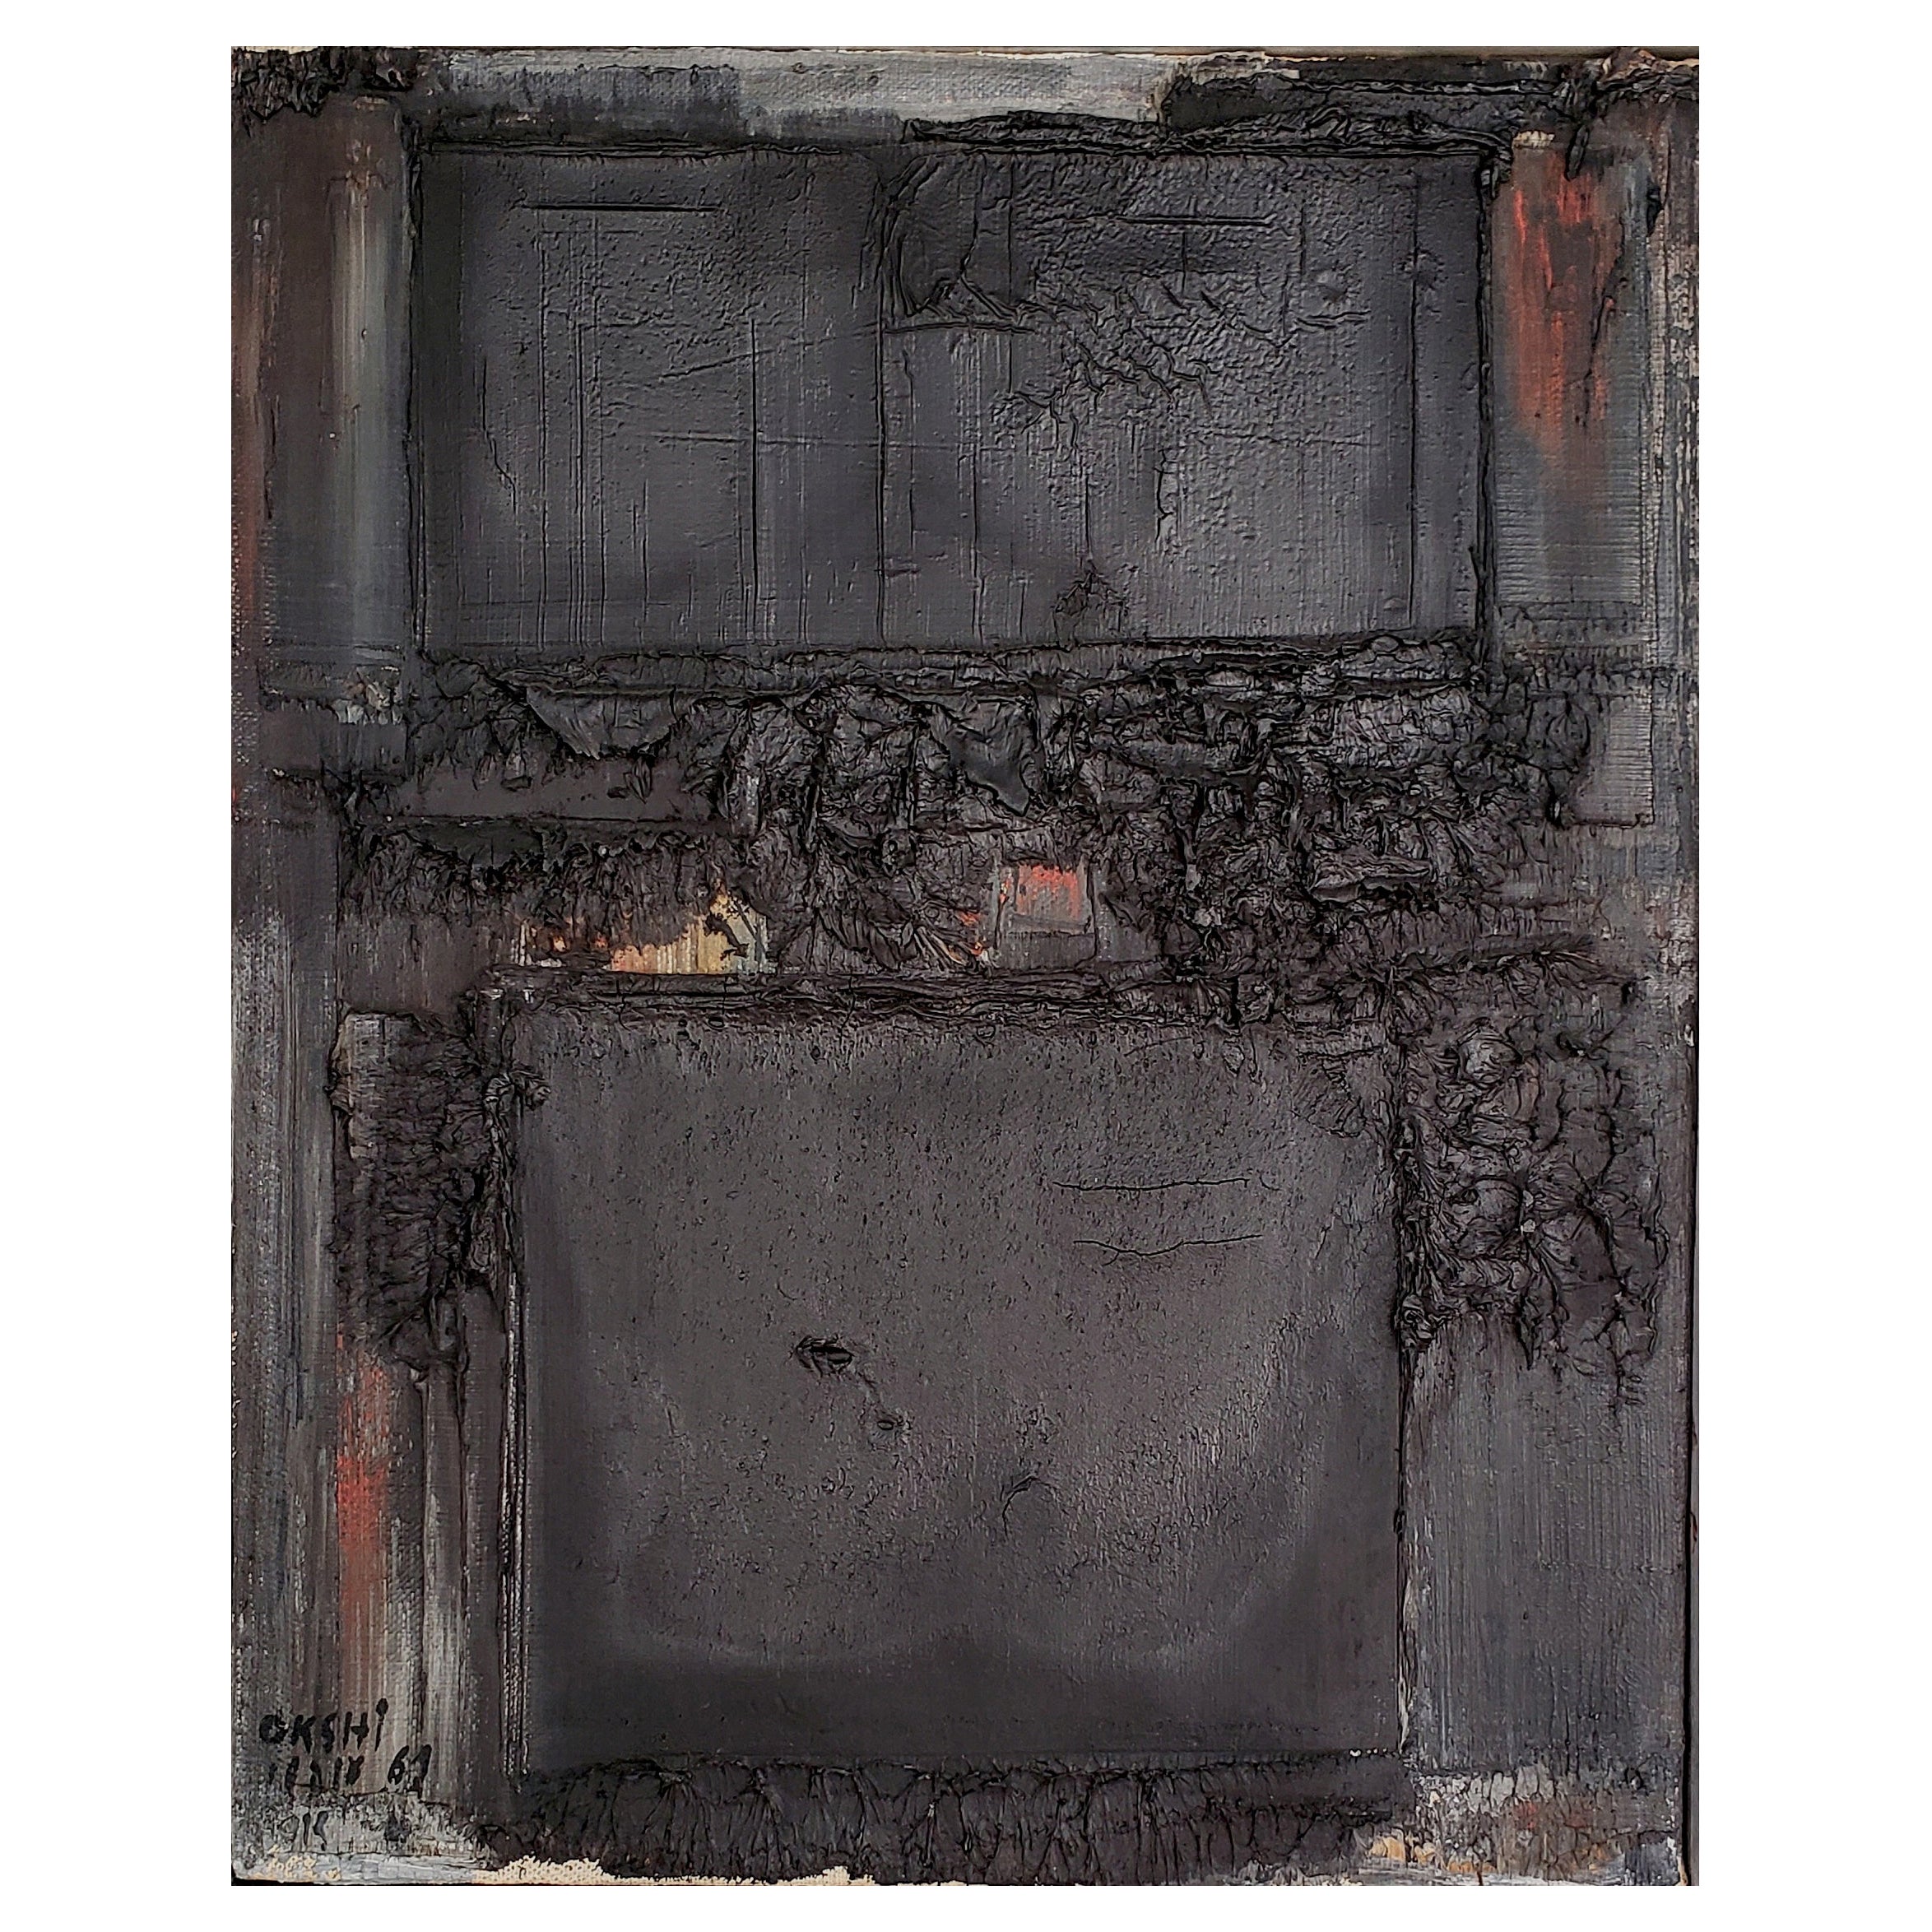 Avshalom Okashi: Abstrakte Komposition, Öl auf Leinwand, datiert 1961